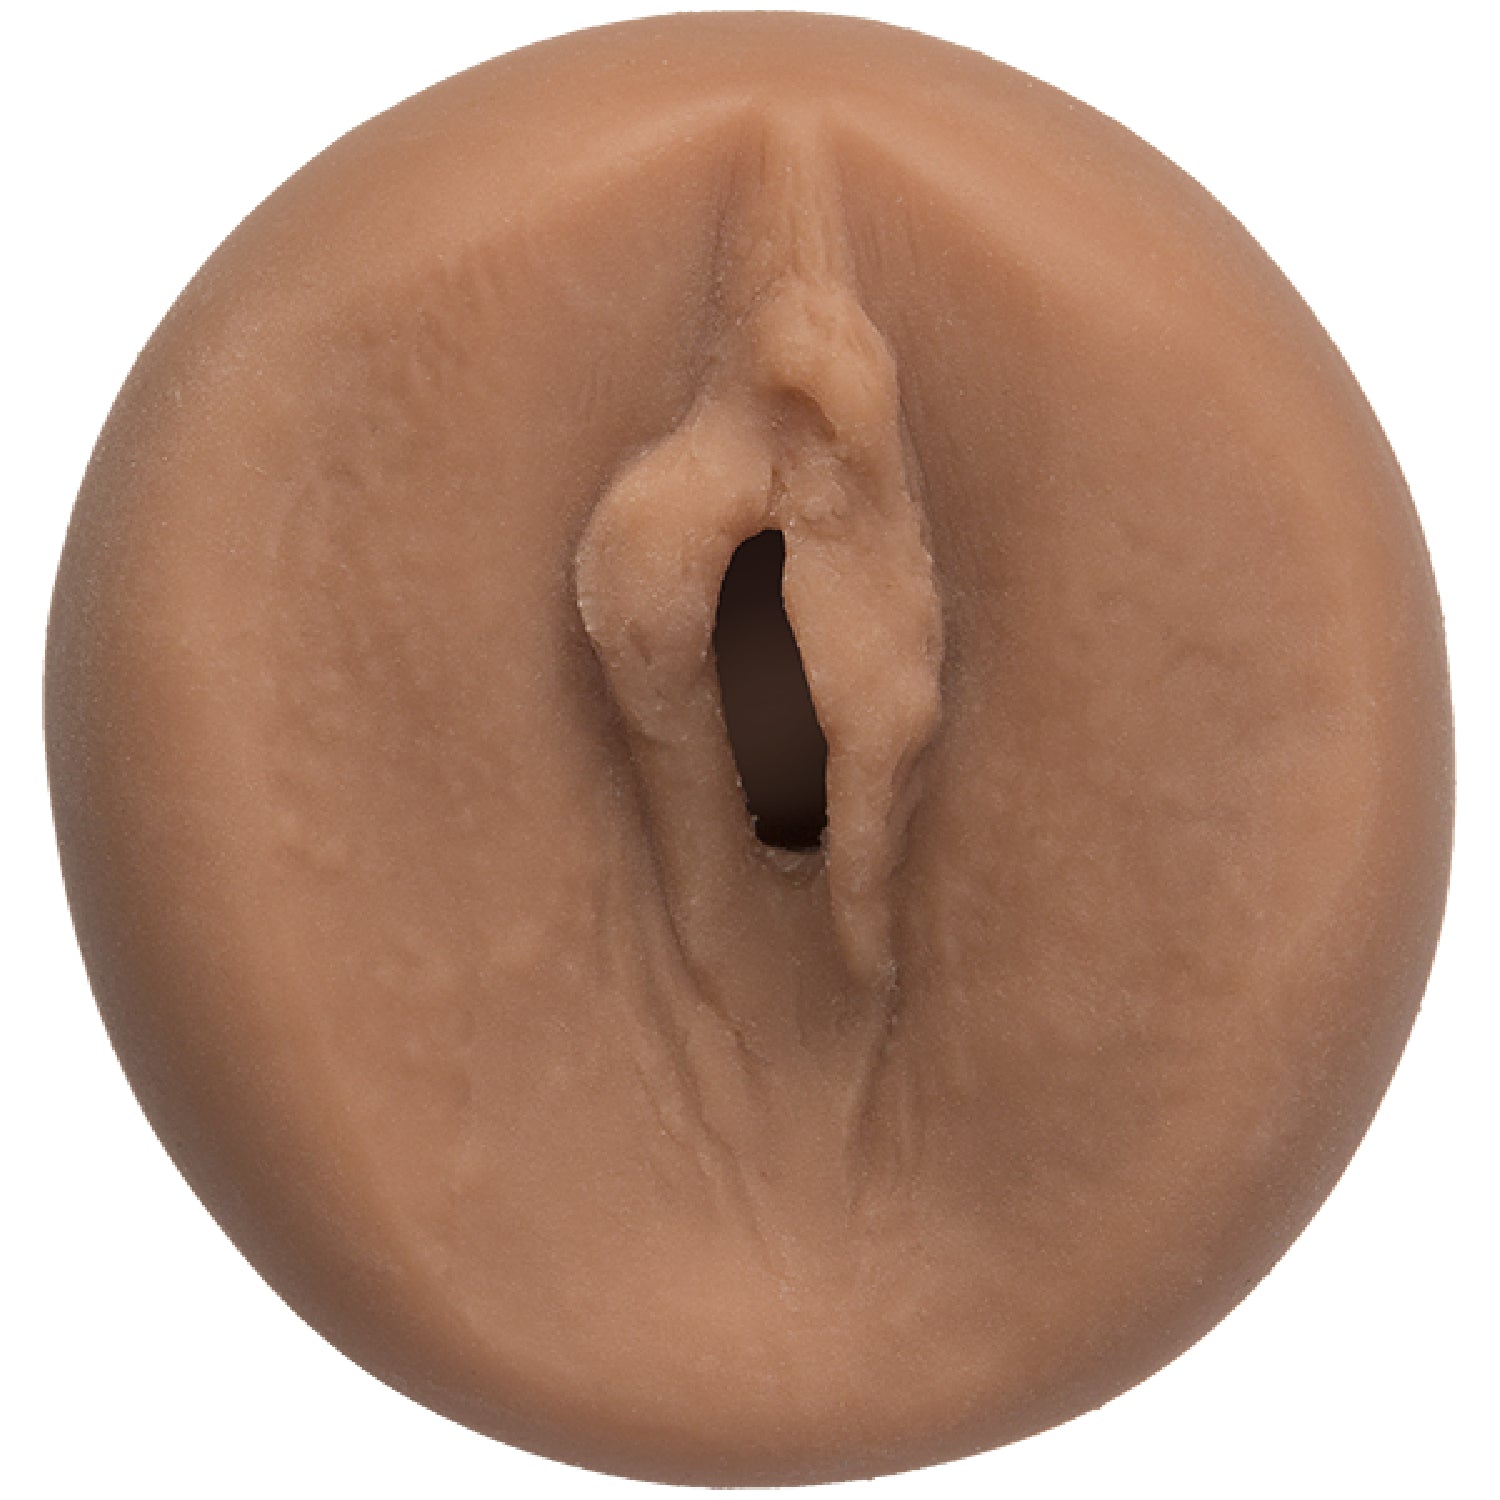 Main Squeeze - The Original Pussy - Caramel